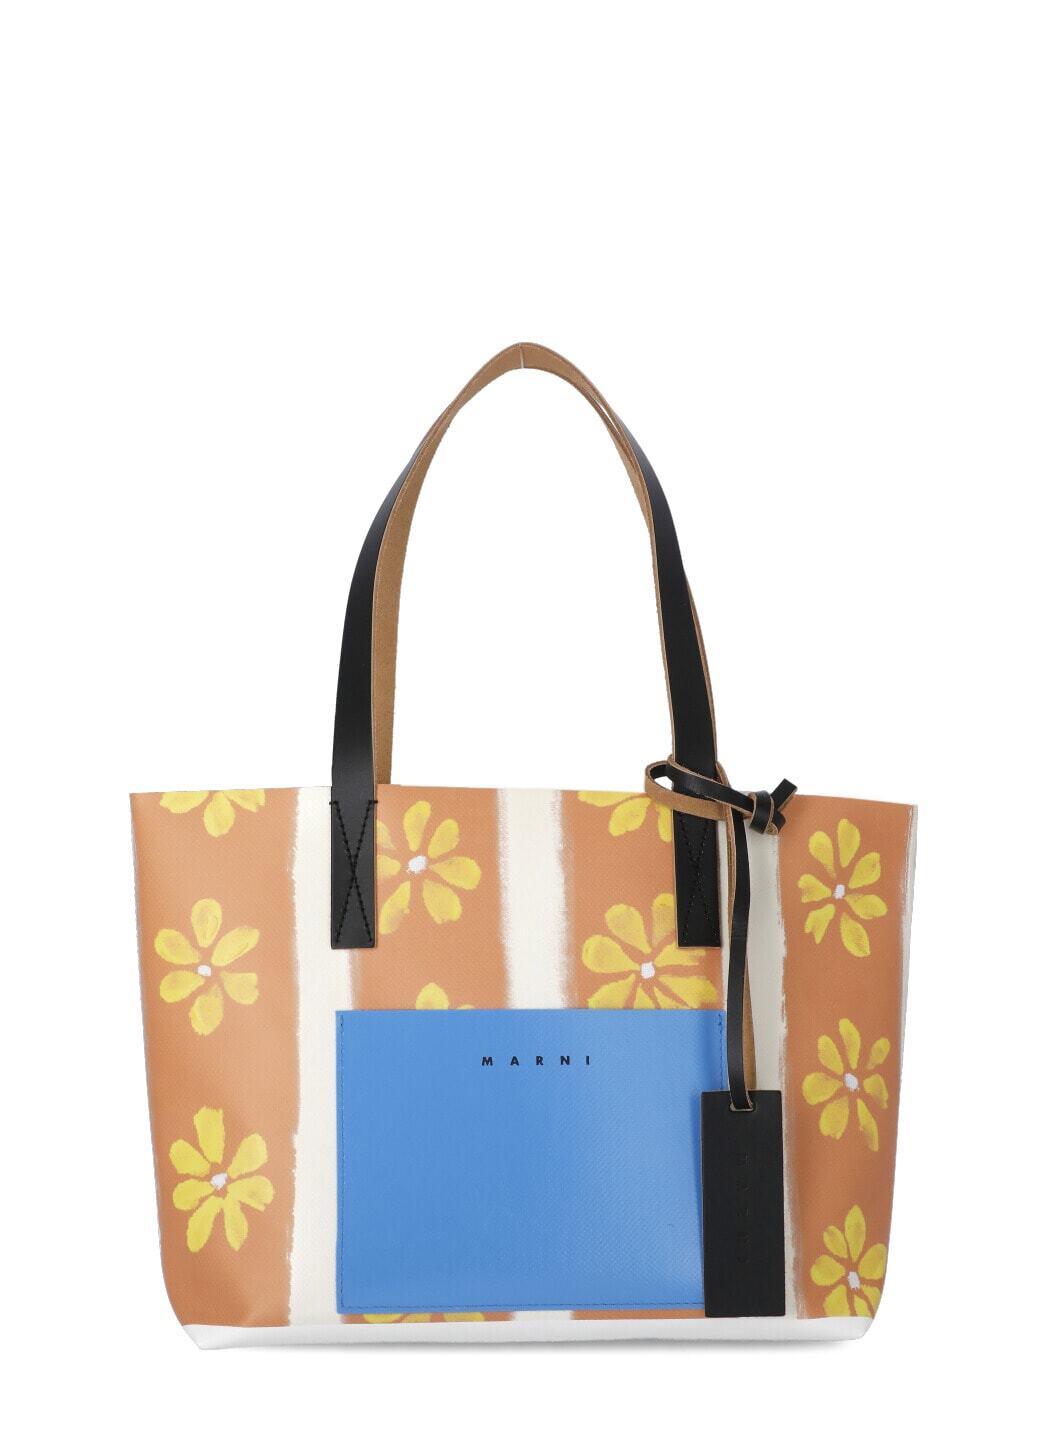 Marni Daisy Lane Printed Shopping Bag in azure